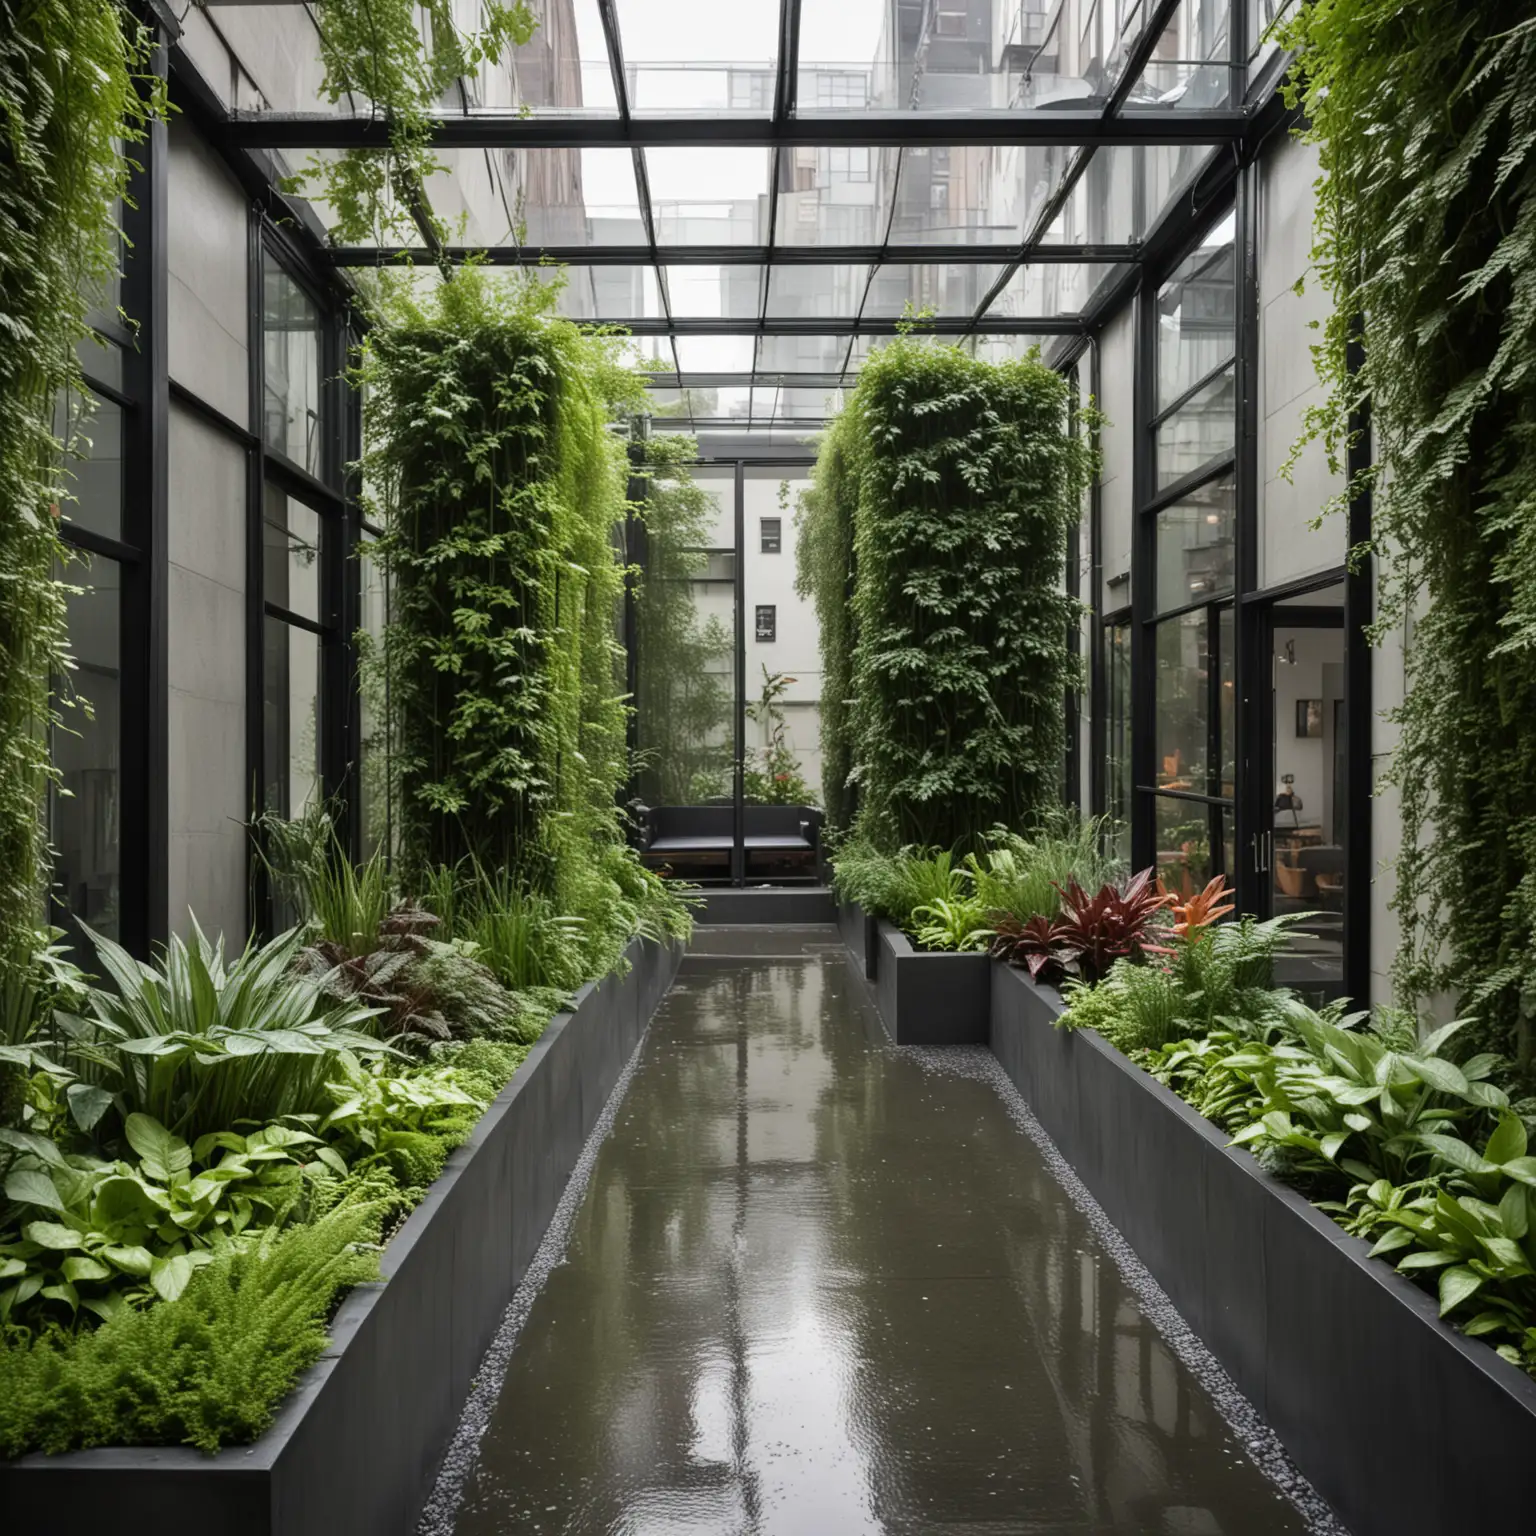 Modern-Urban-Garden-Design-with-Vertical-Gardens-and-Rainy-Spring-Ambiance